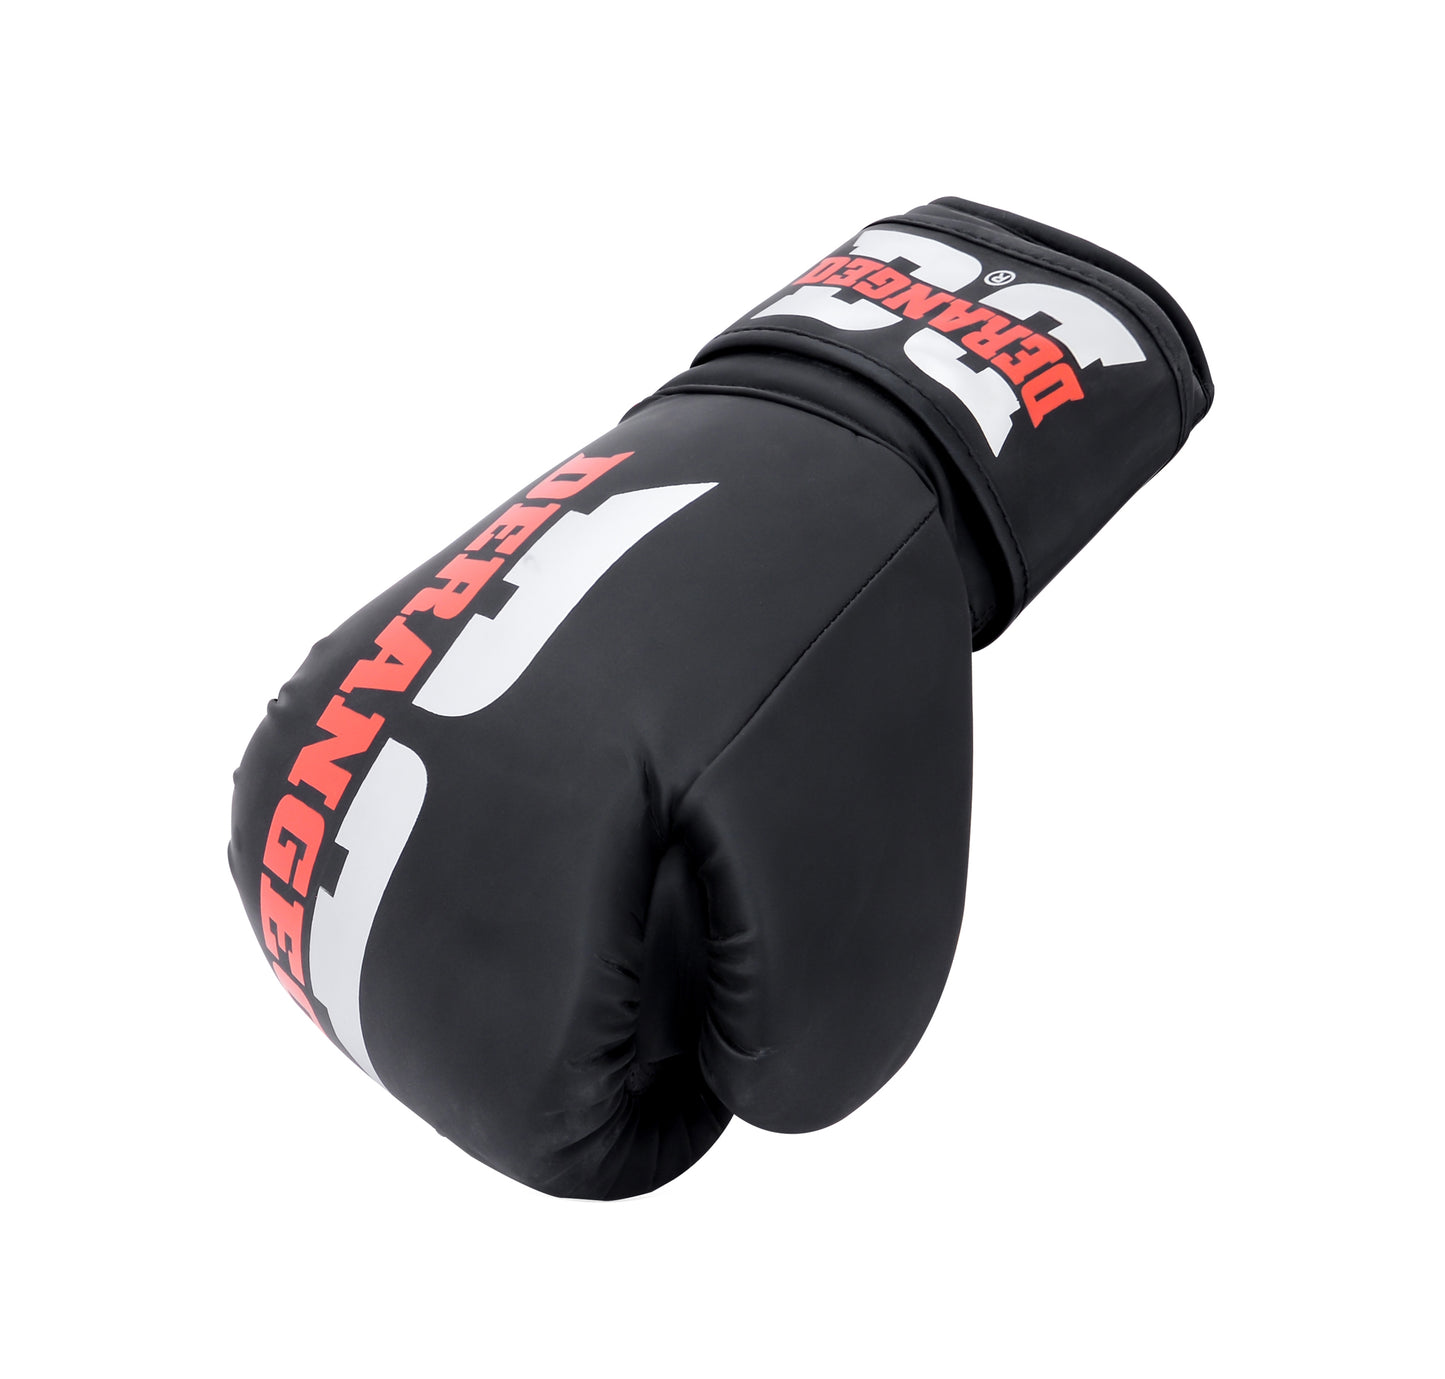 DERANGED Boxing Gloves Red in Black